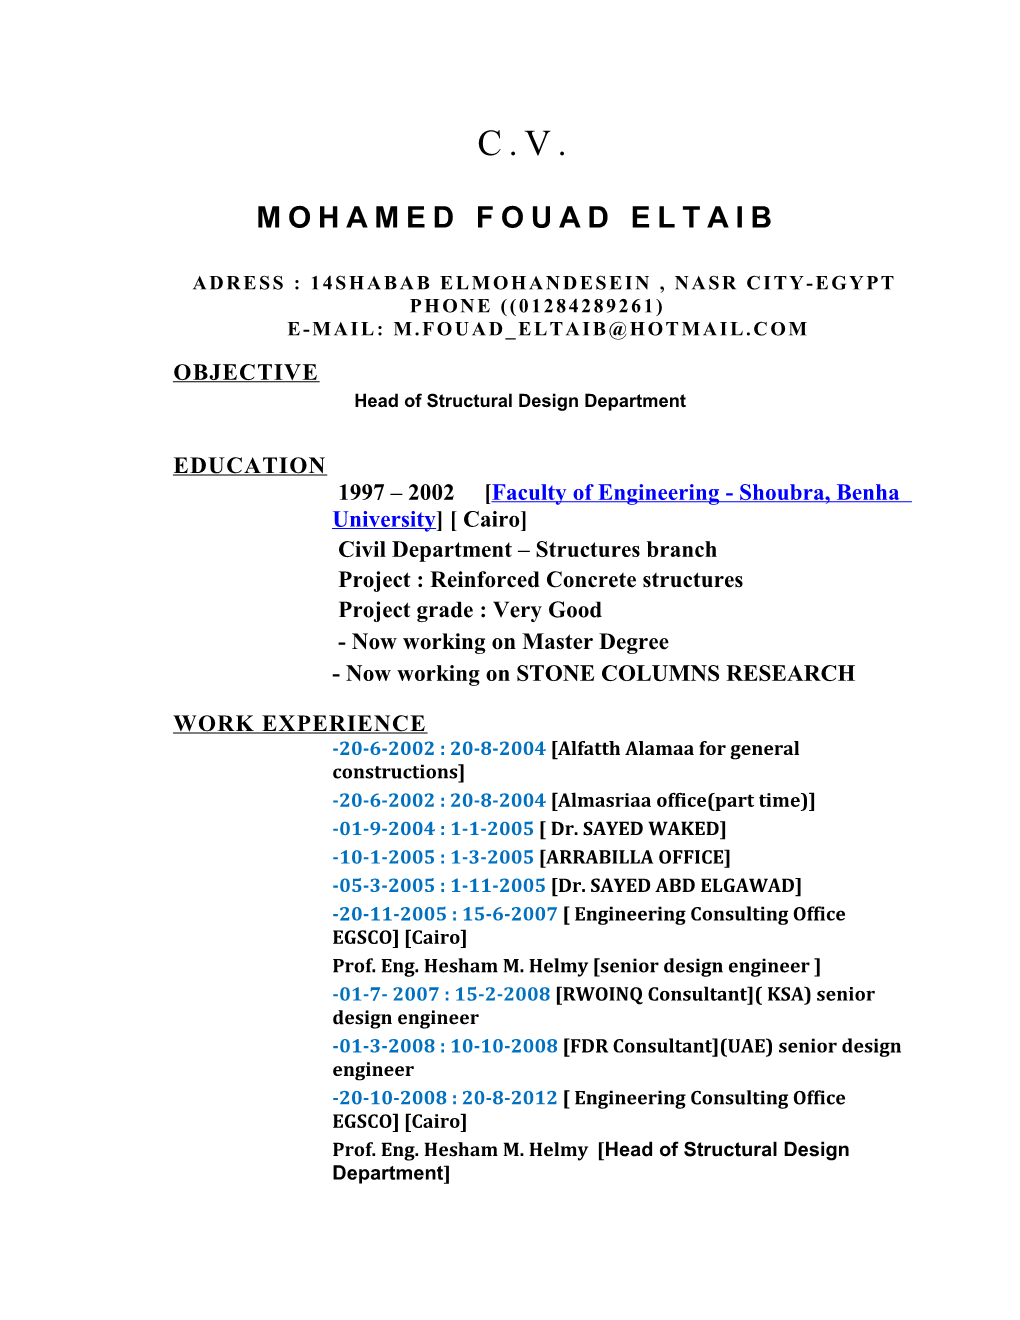 Mohamed Fouad Eltaib